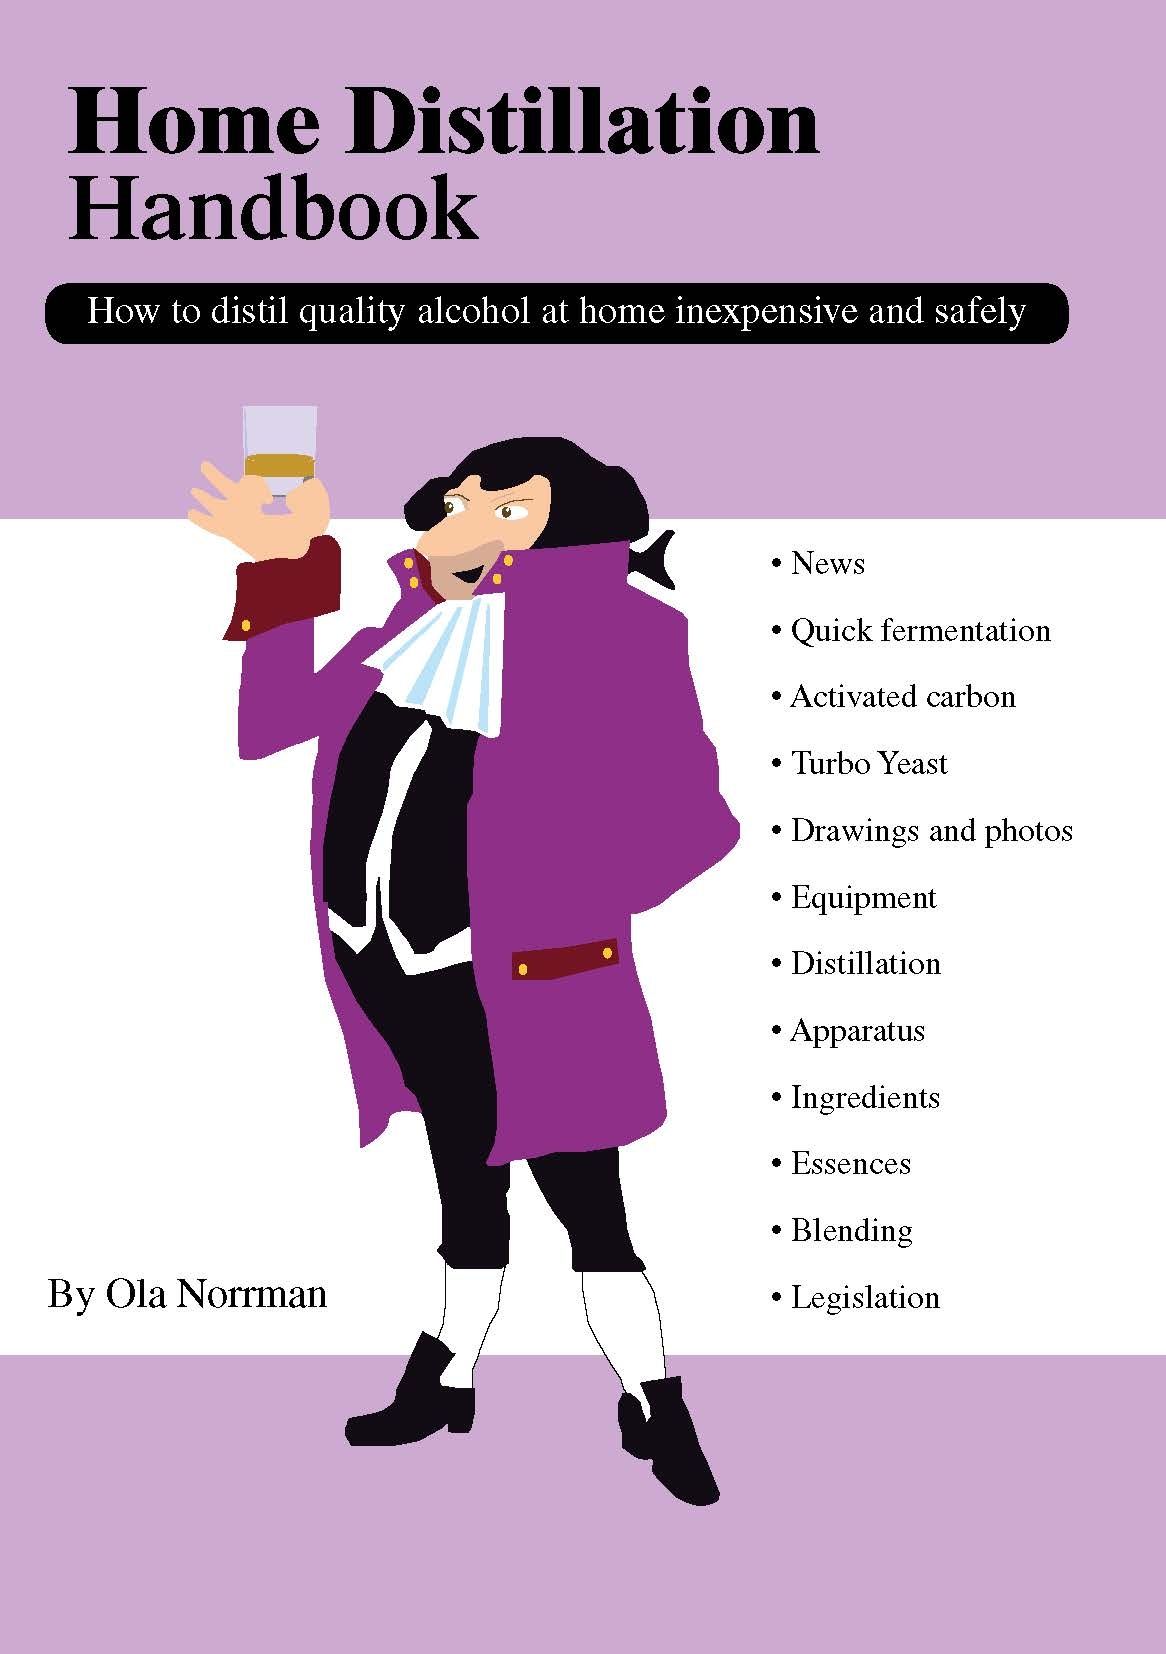 Home distillation handbook, eBook by Ola Norrman